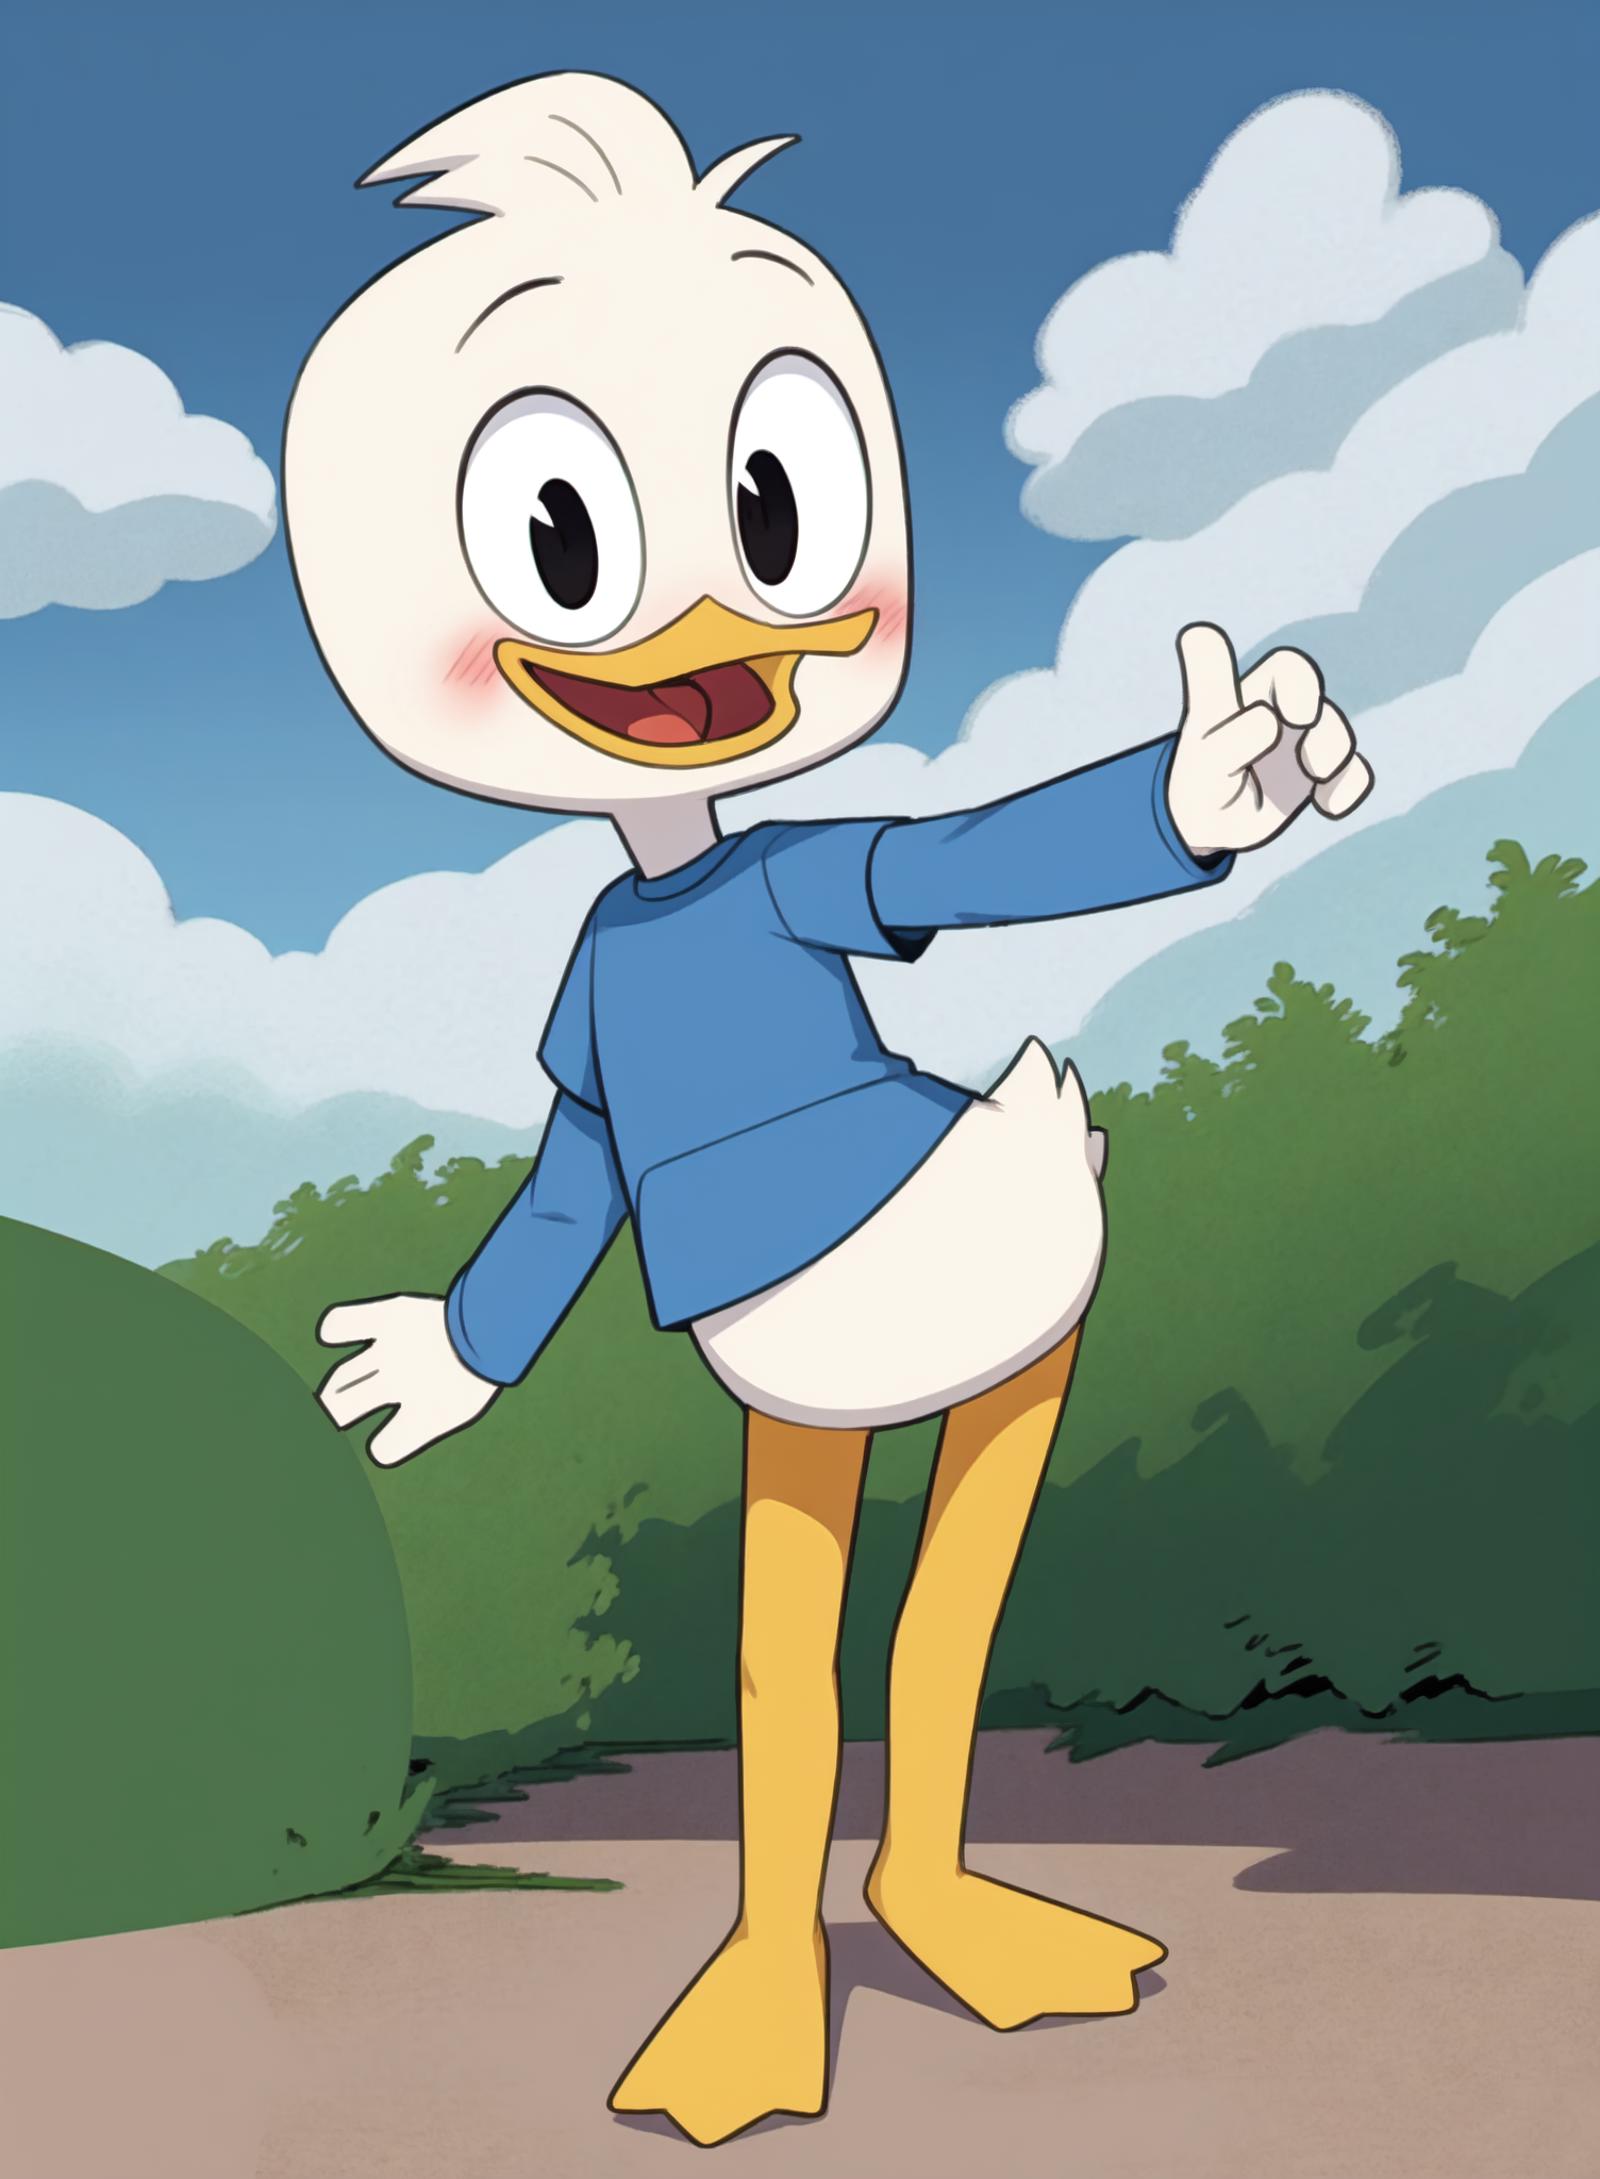 Huey Duck, Dewey Duck, Louie Duck | Ducktales 2017 image by cloud9999